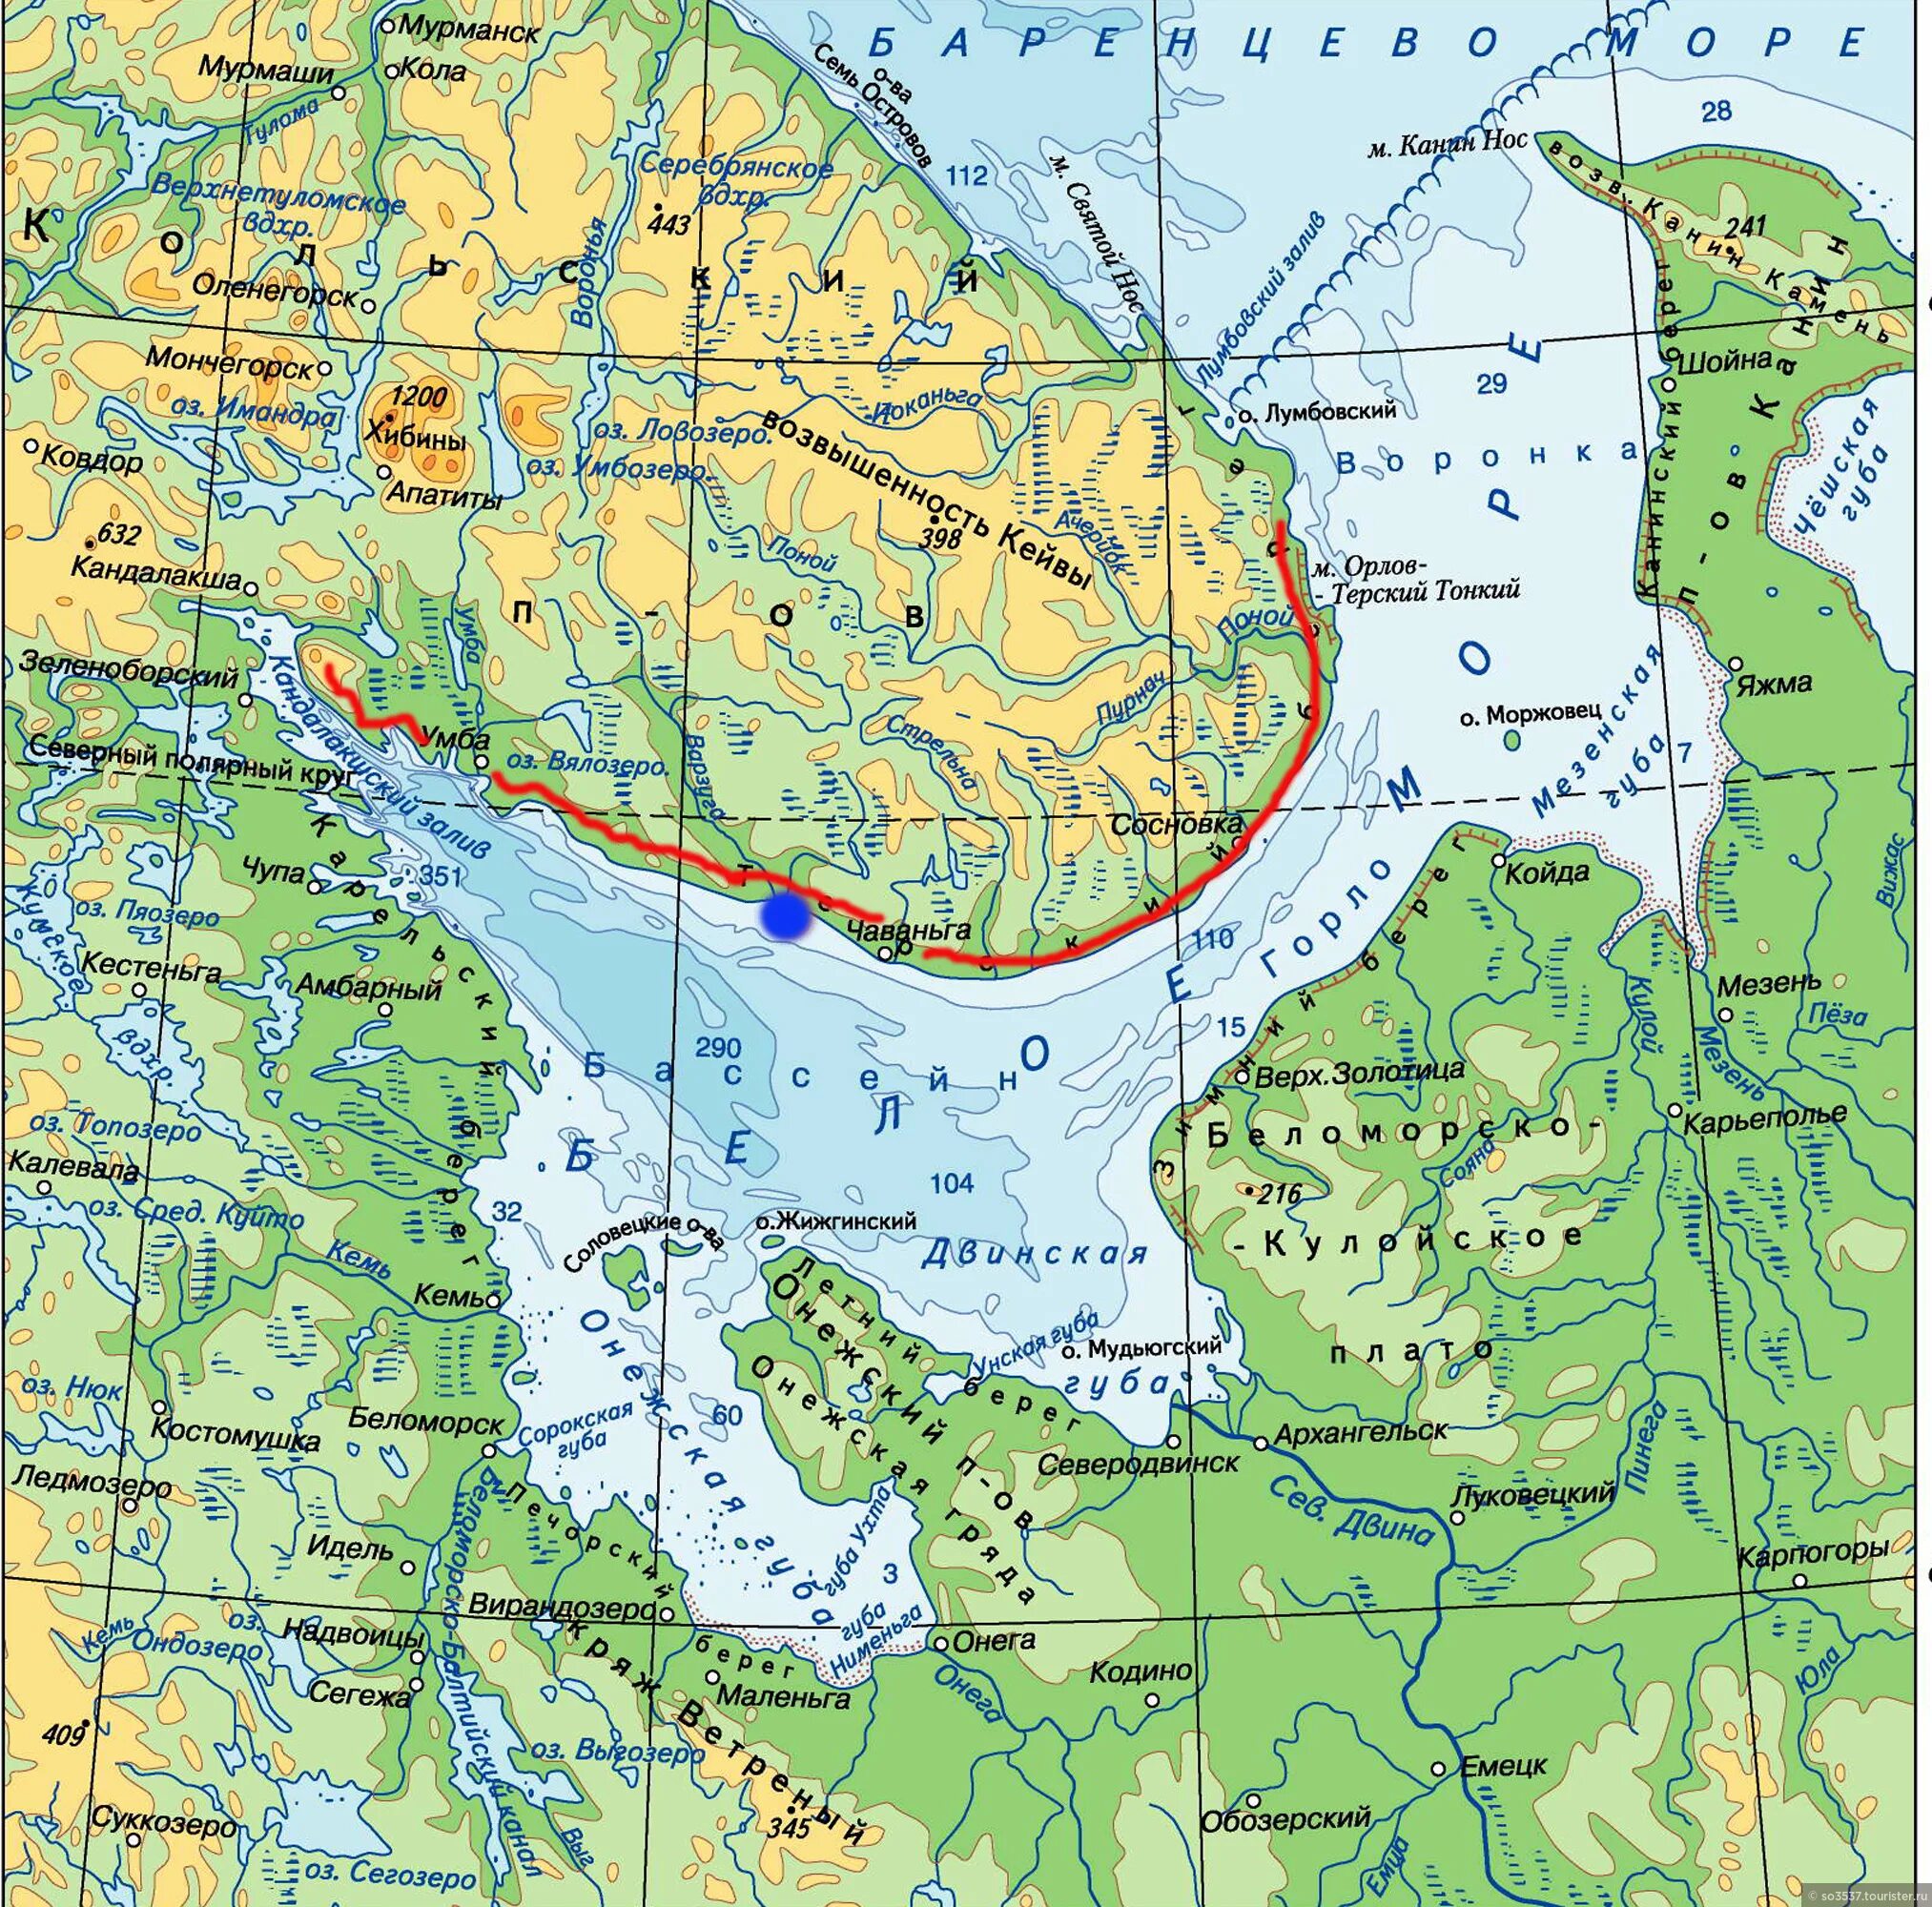 Реки баренцева моря в россии